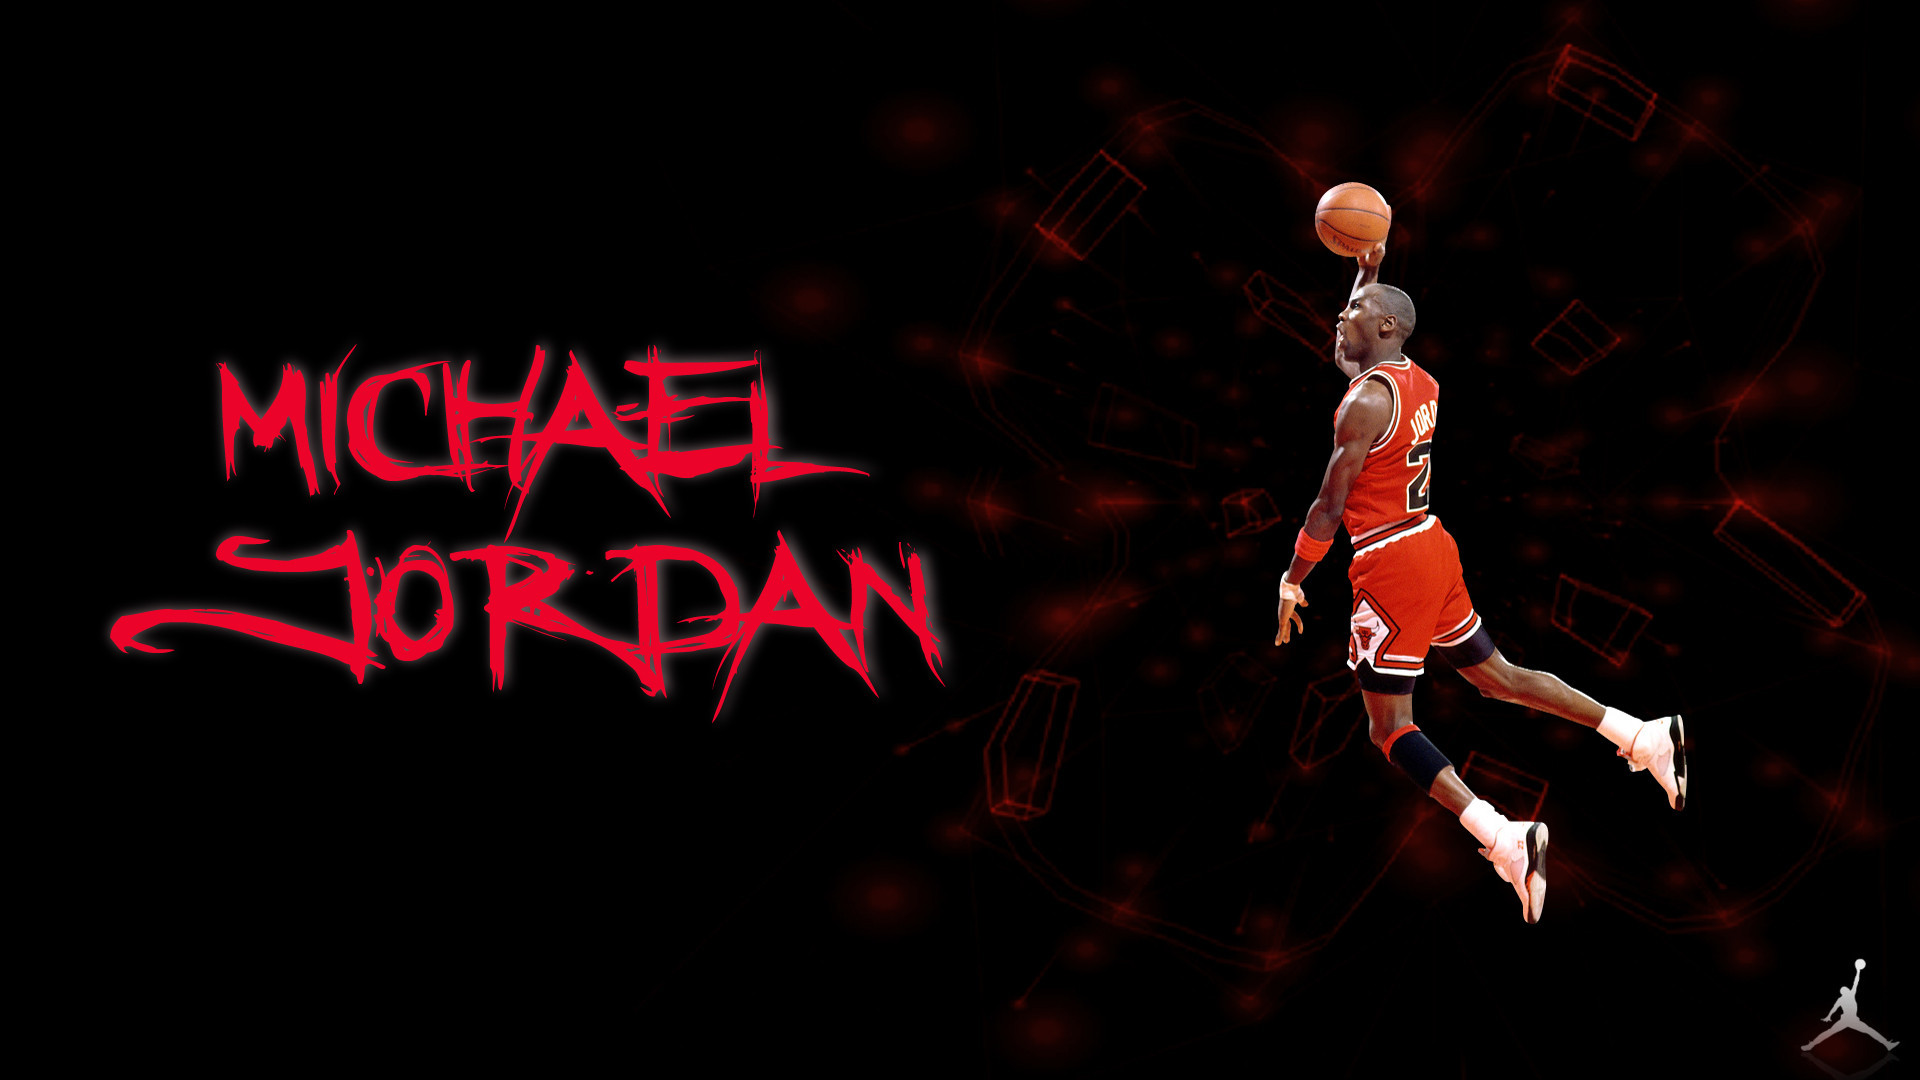 1920x1080 Michael Jordan Wallpapers High Quality